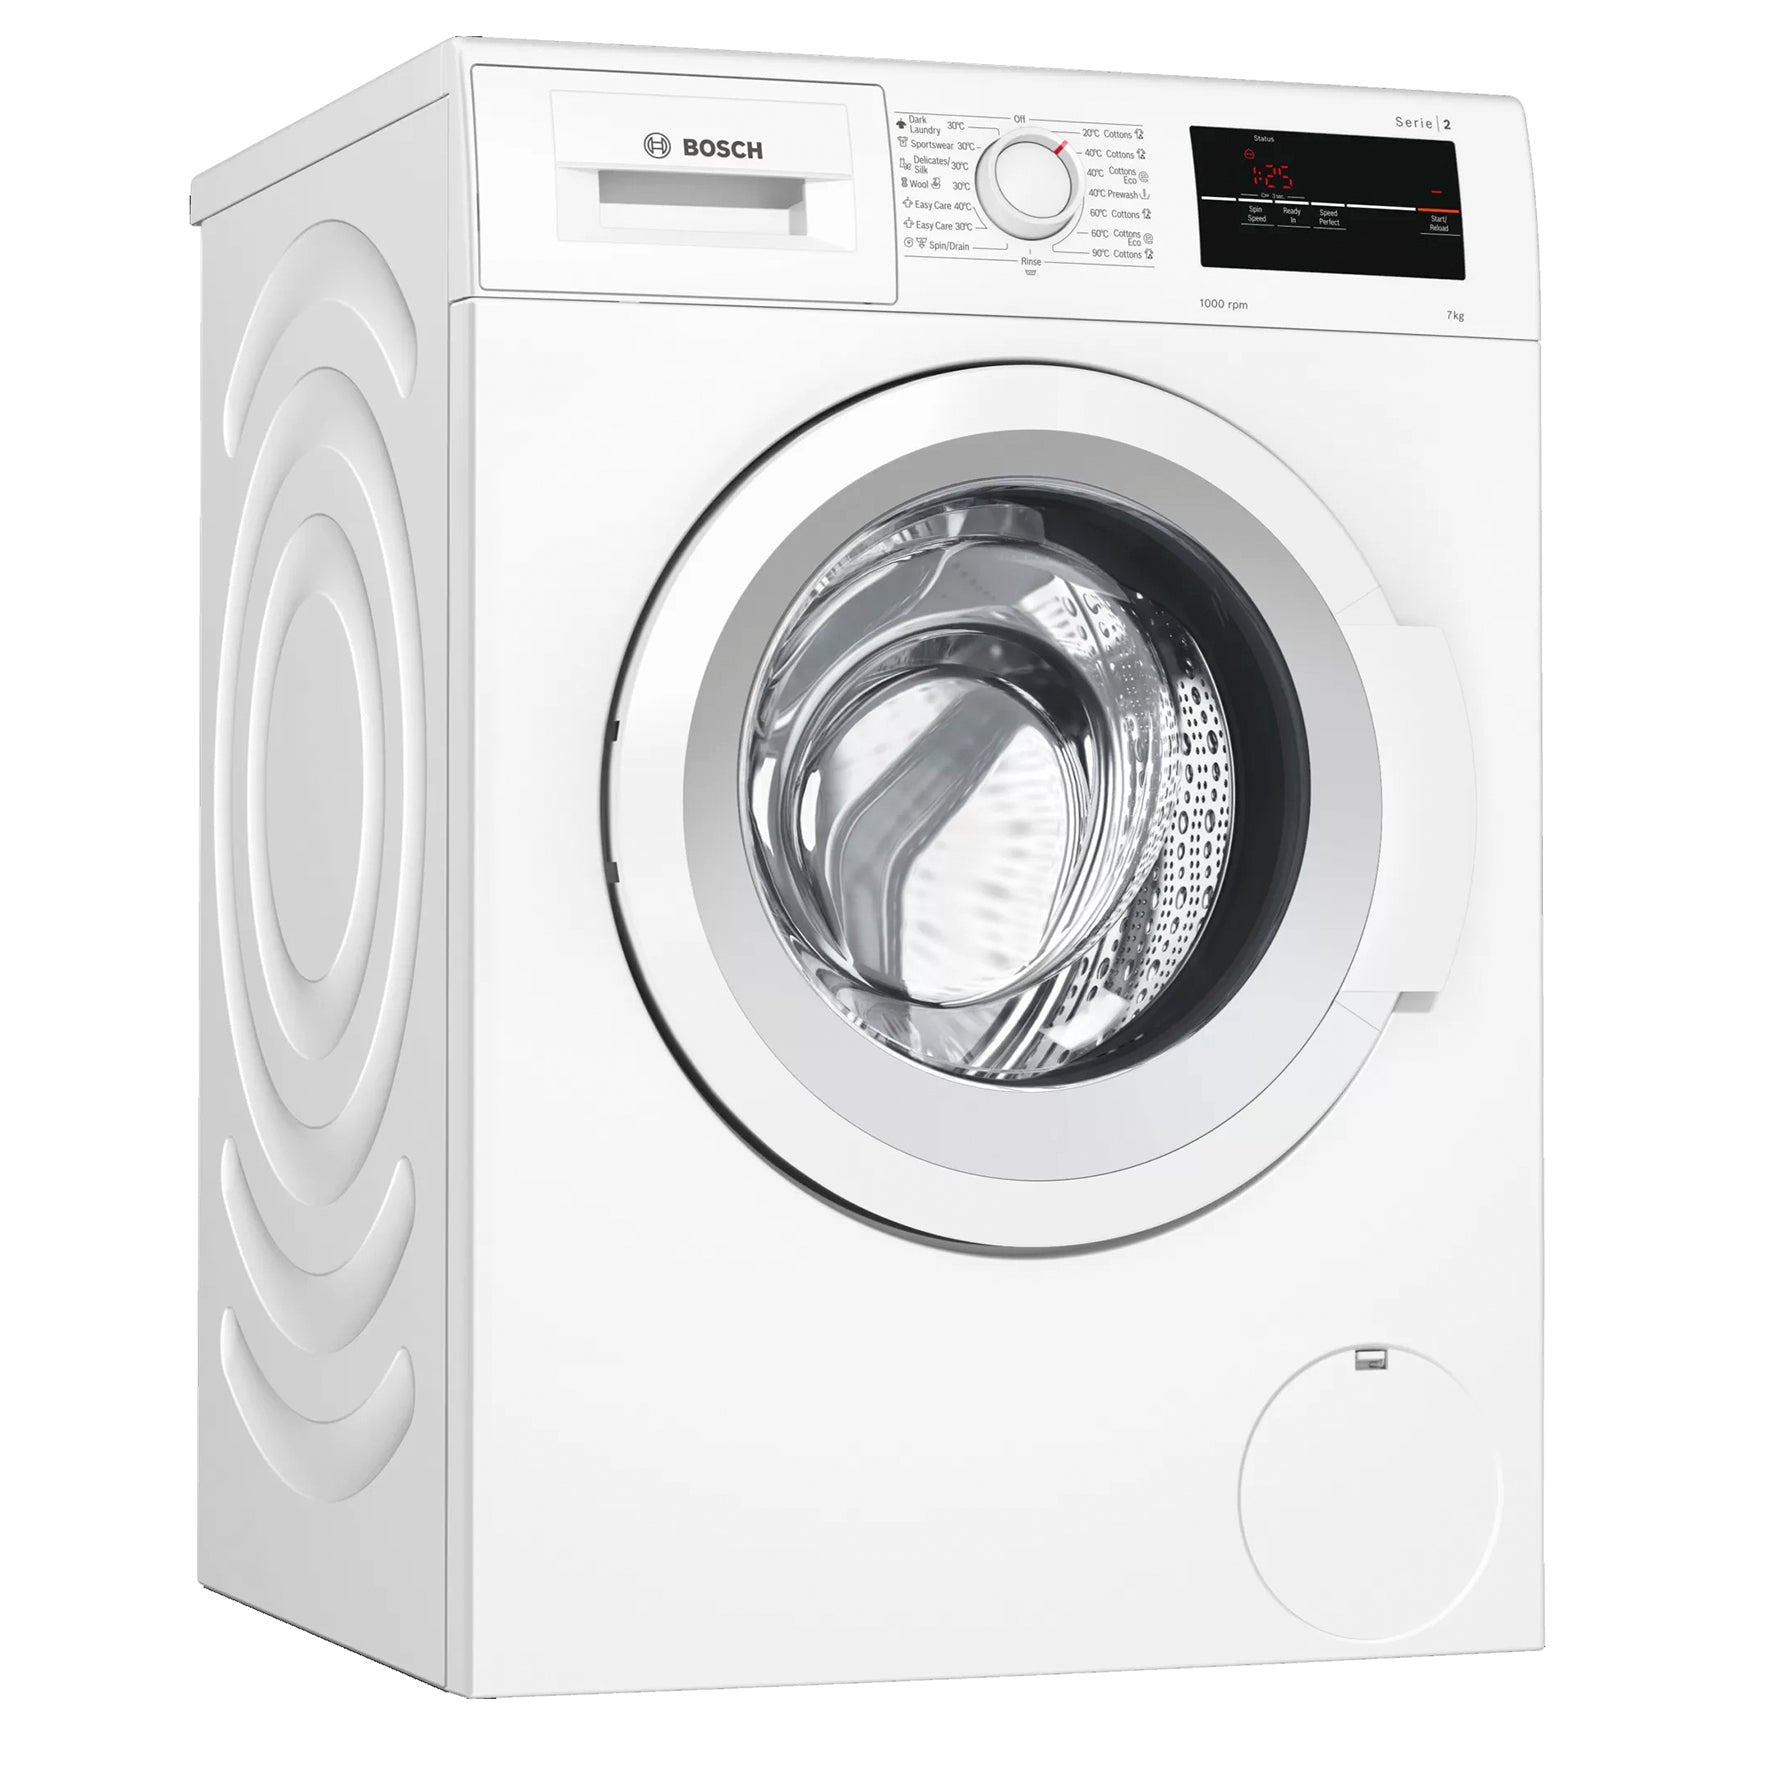 Bosch 7kg Front Loader Washing Machine White WAJ20170ZA